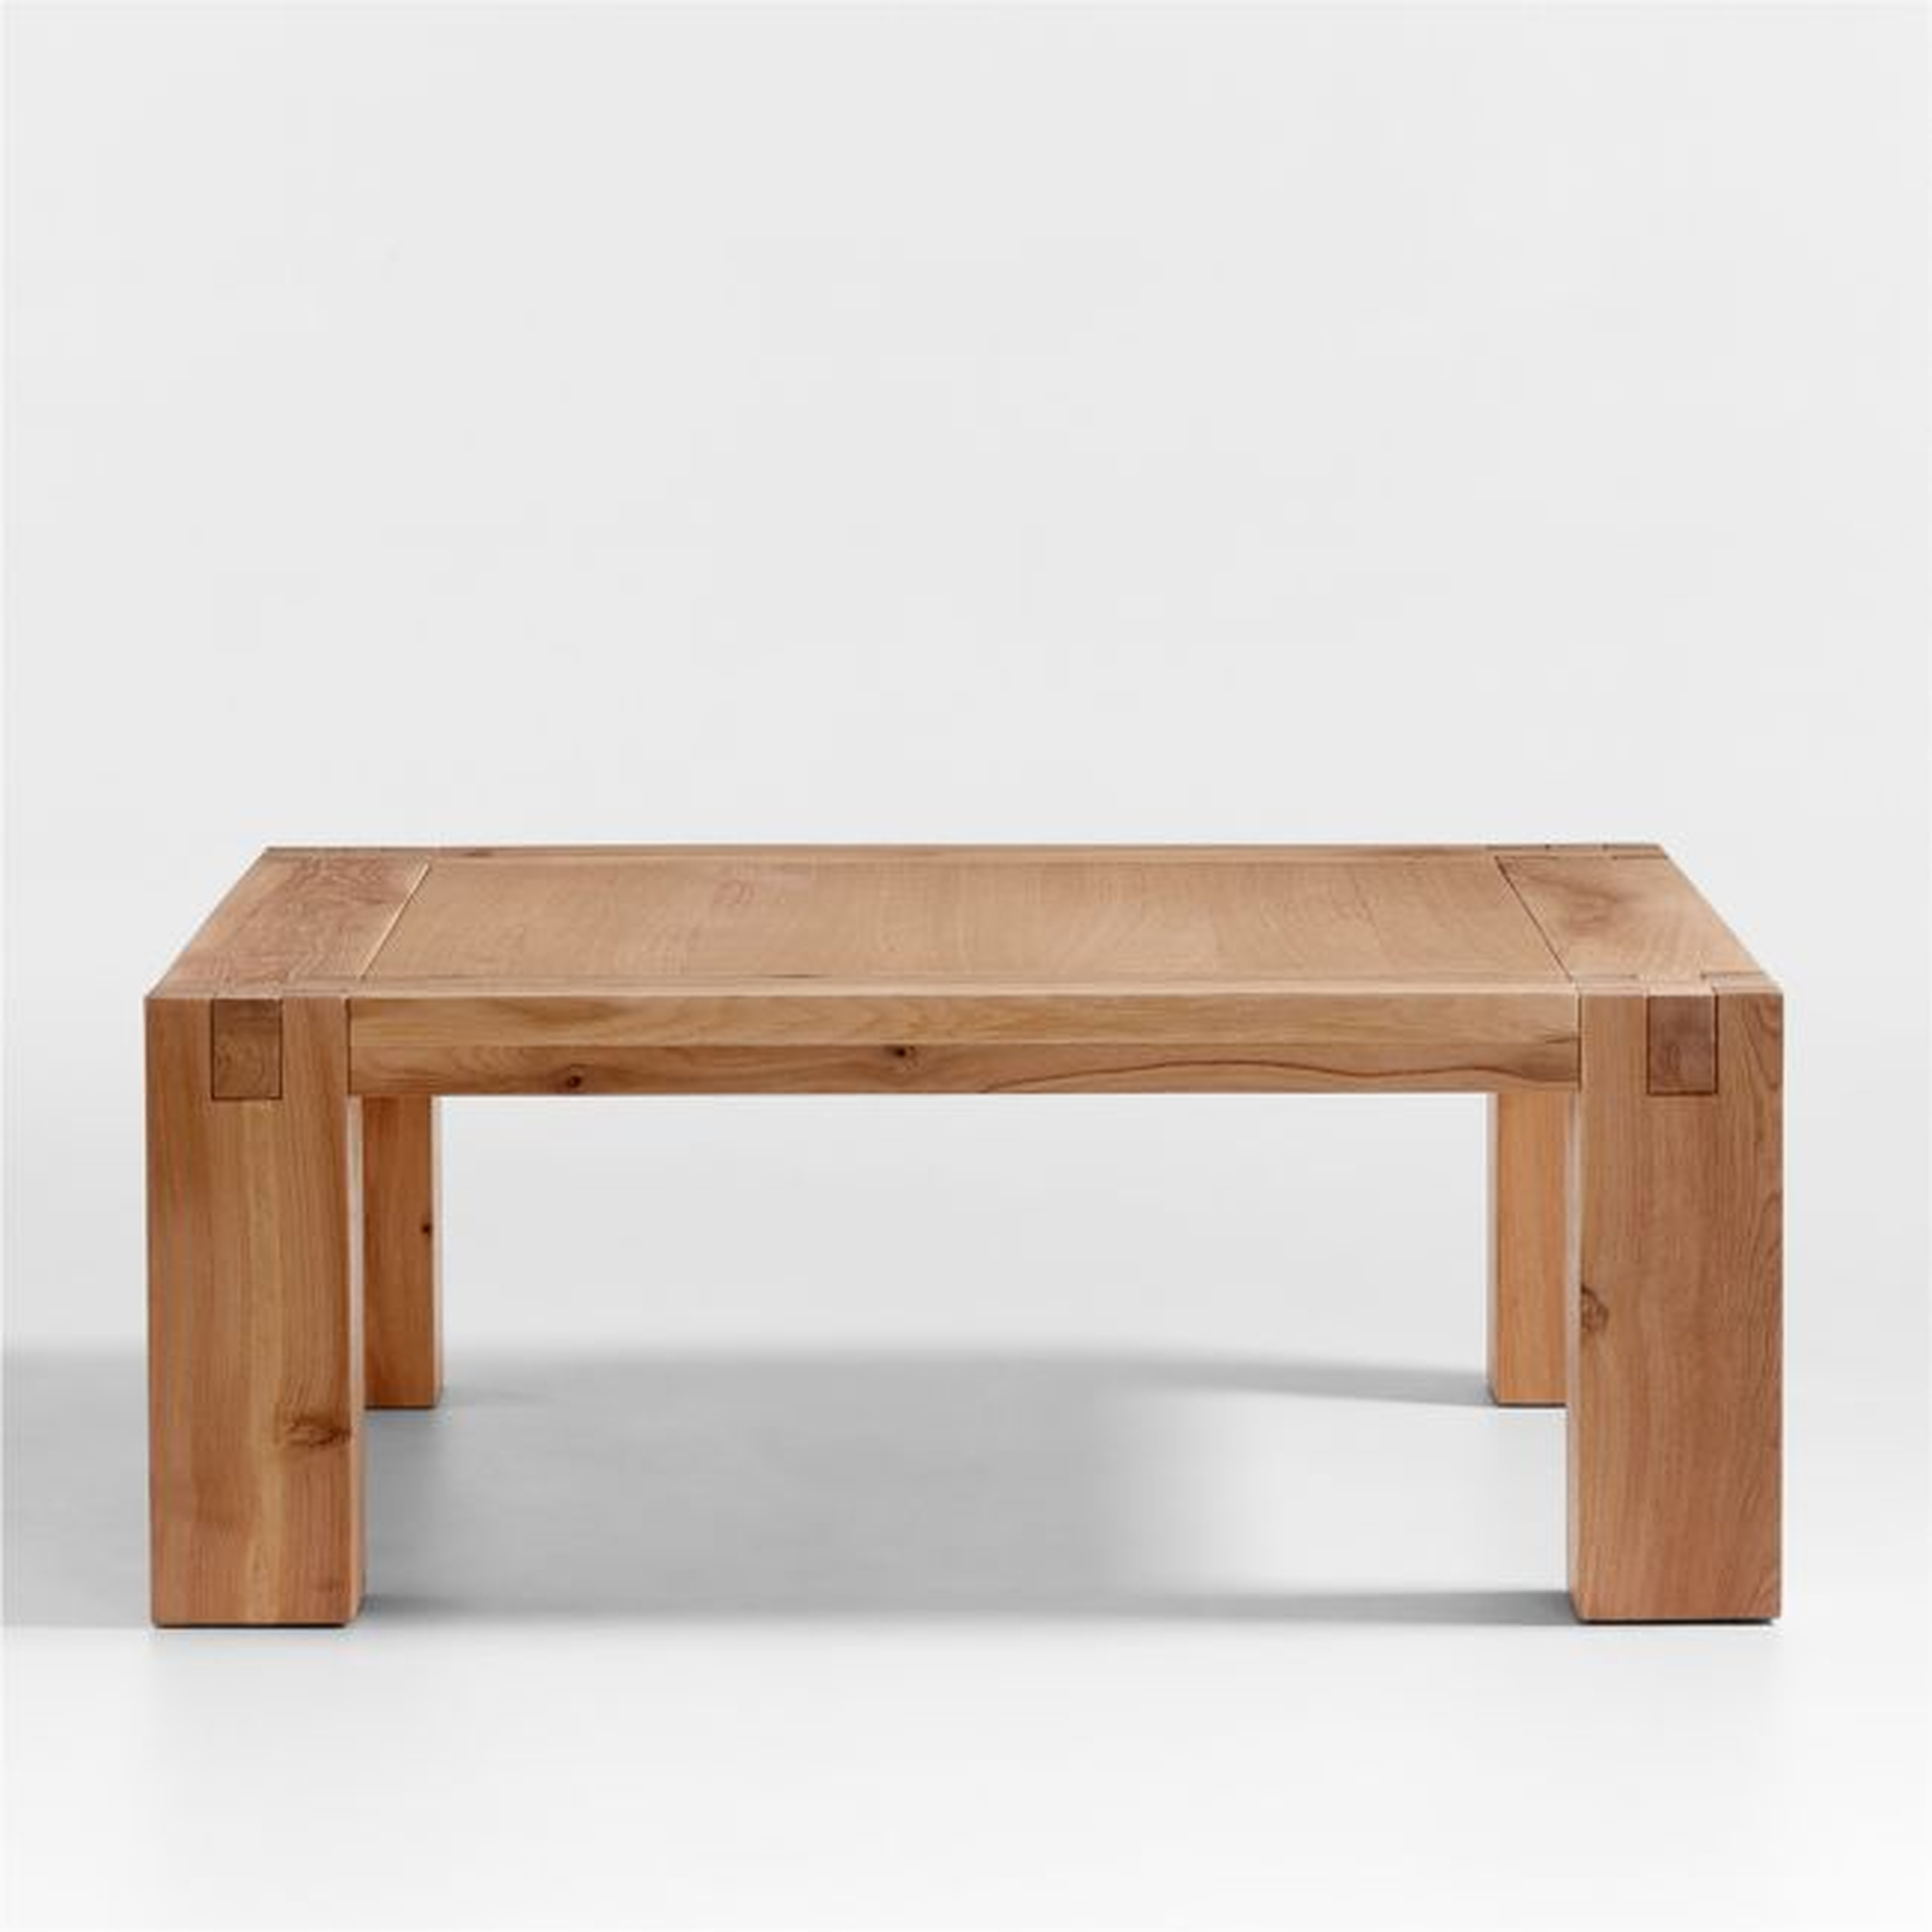 Shinola Utility Square Oak Coffee Table - Crate and Barrel